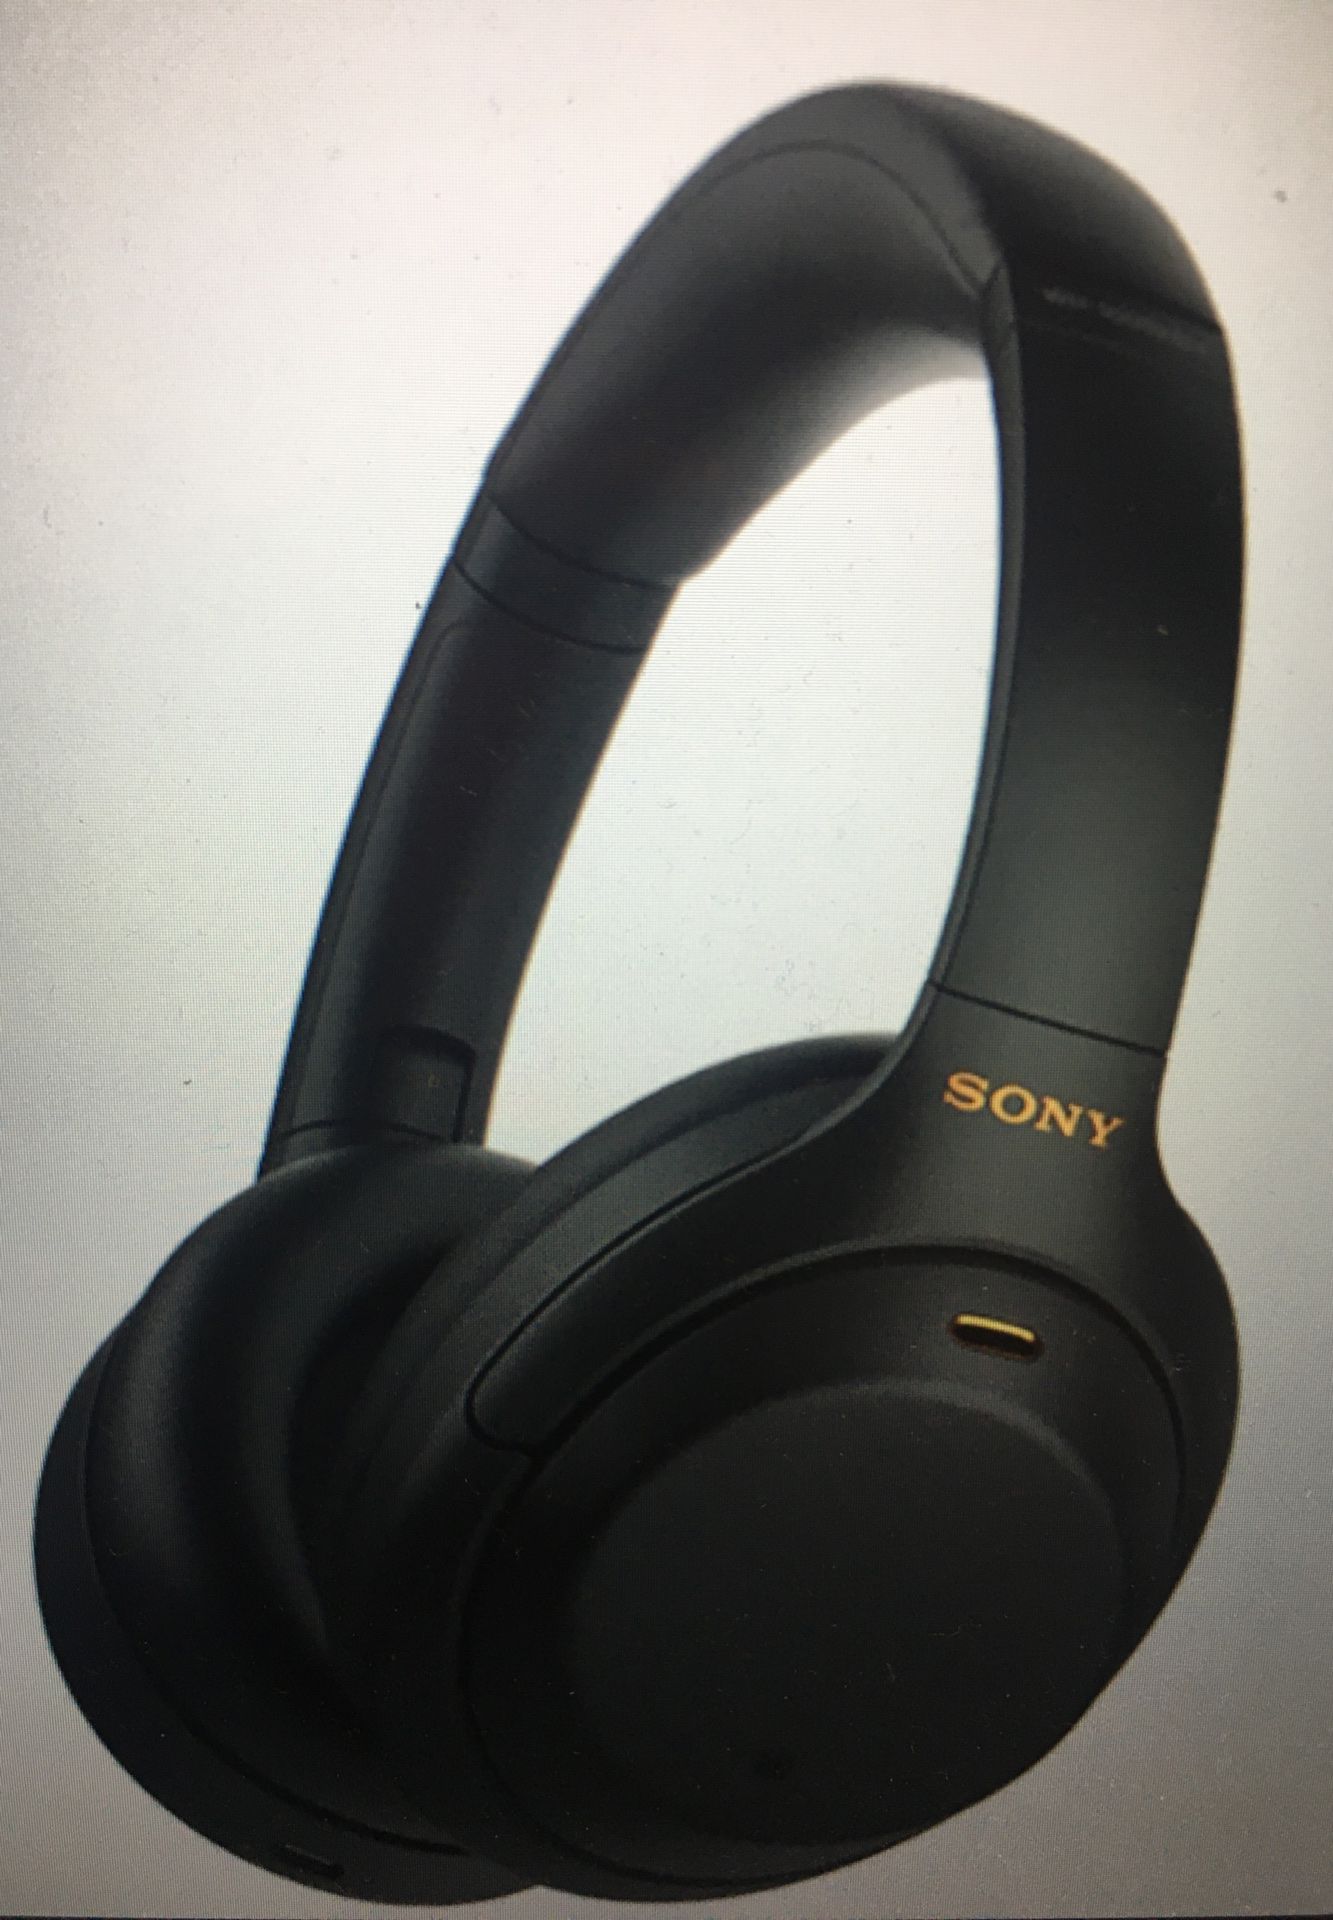 Sony WH-1000XM4 noise cancellation headphones